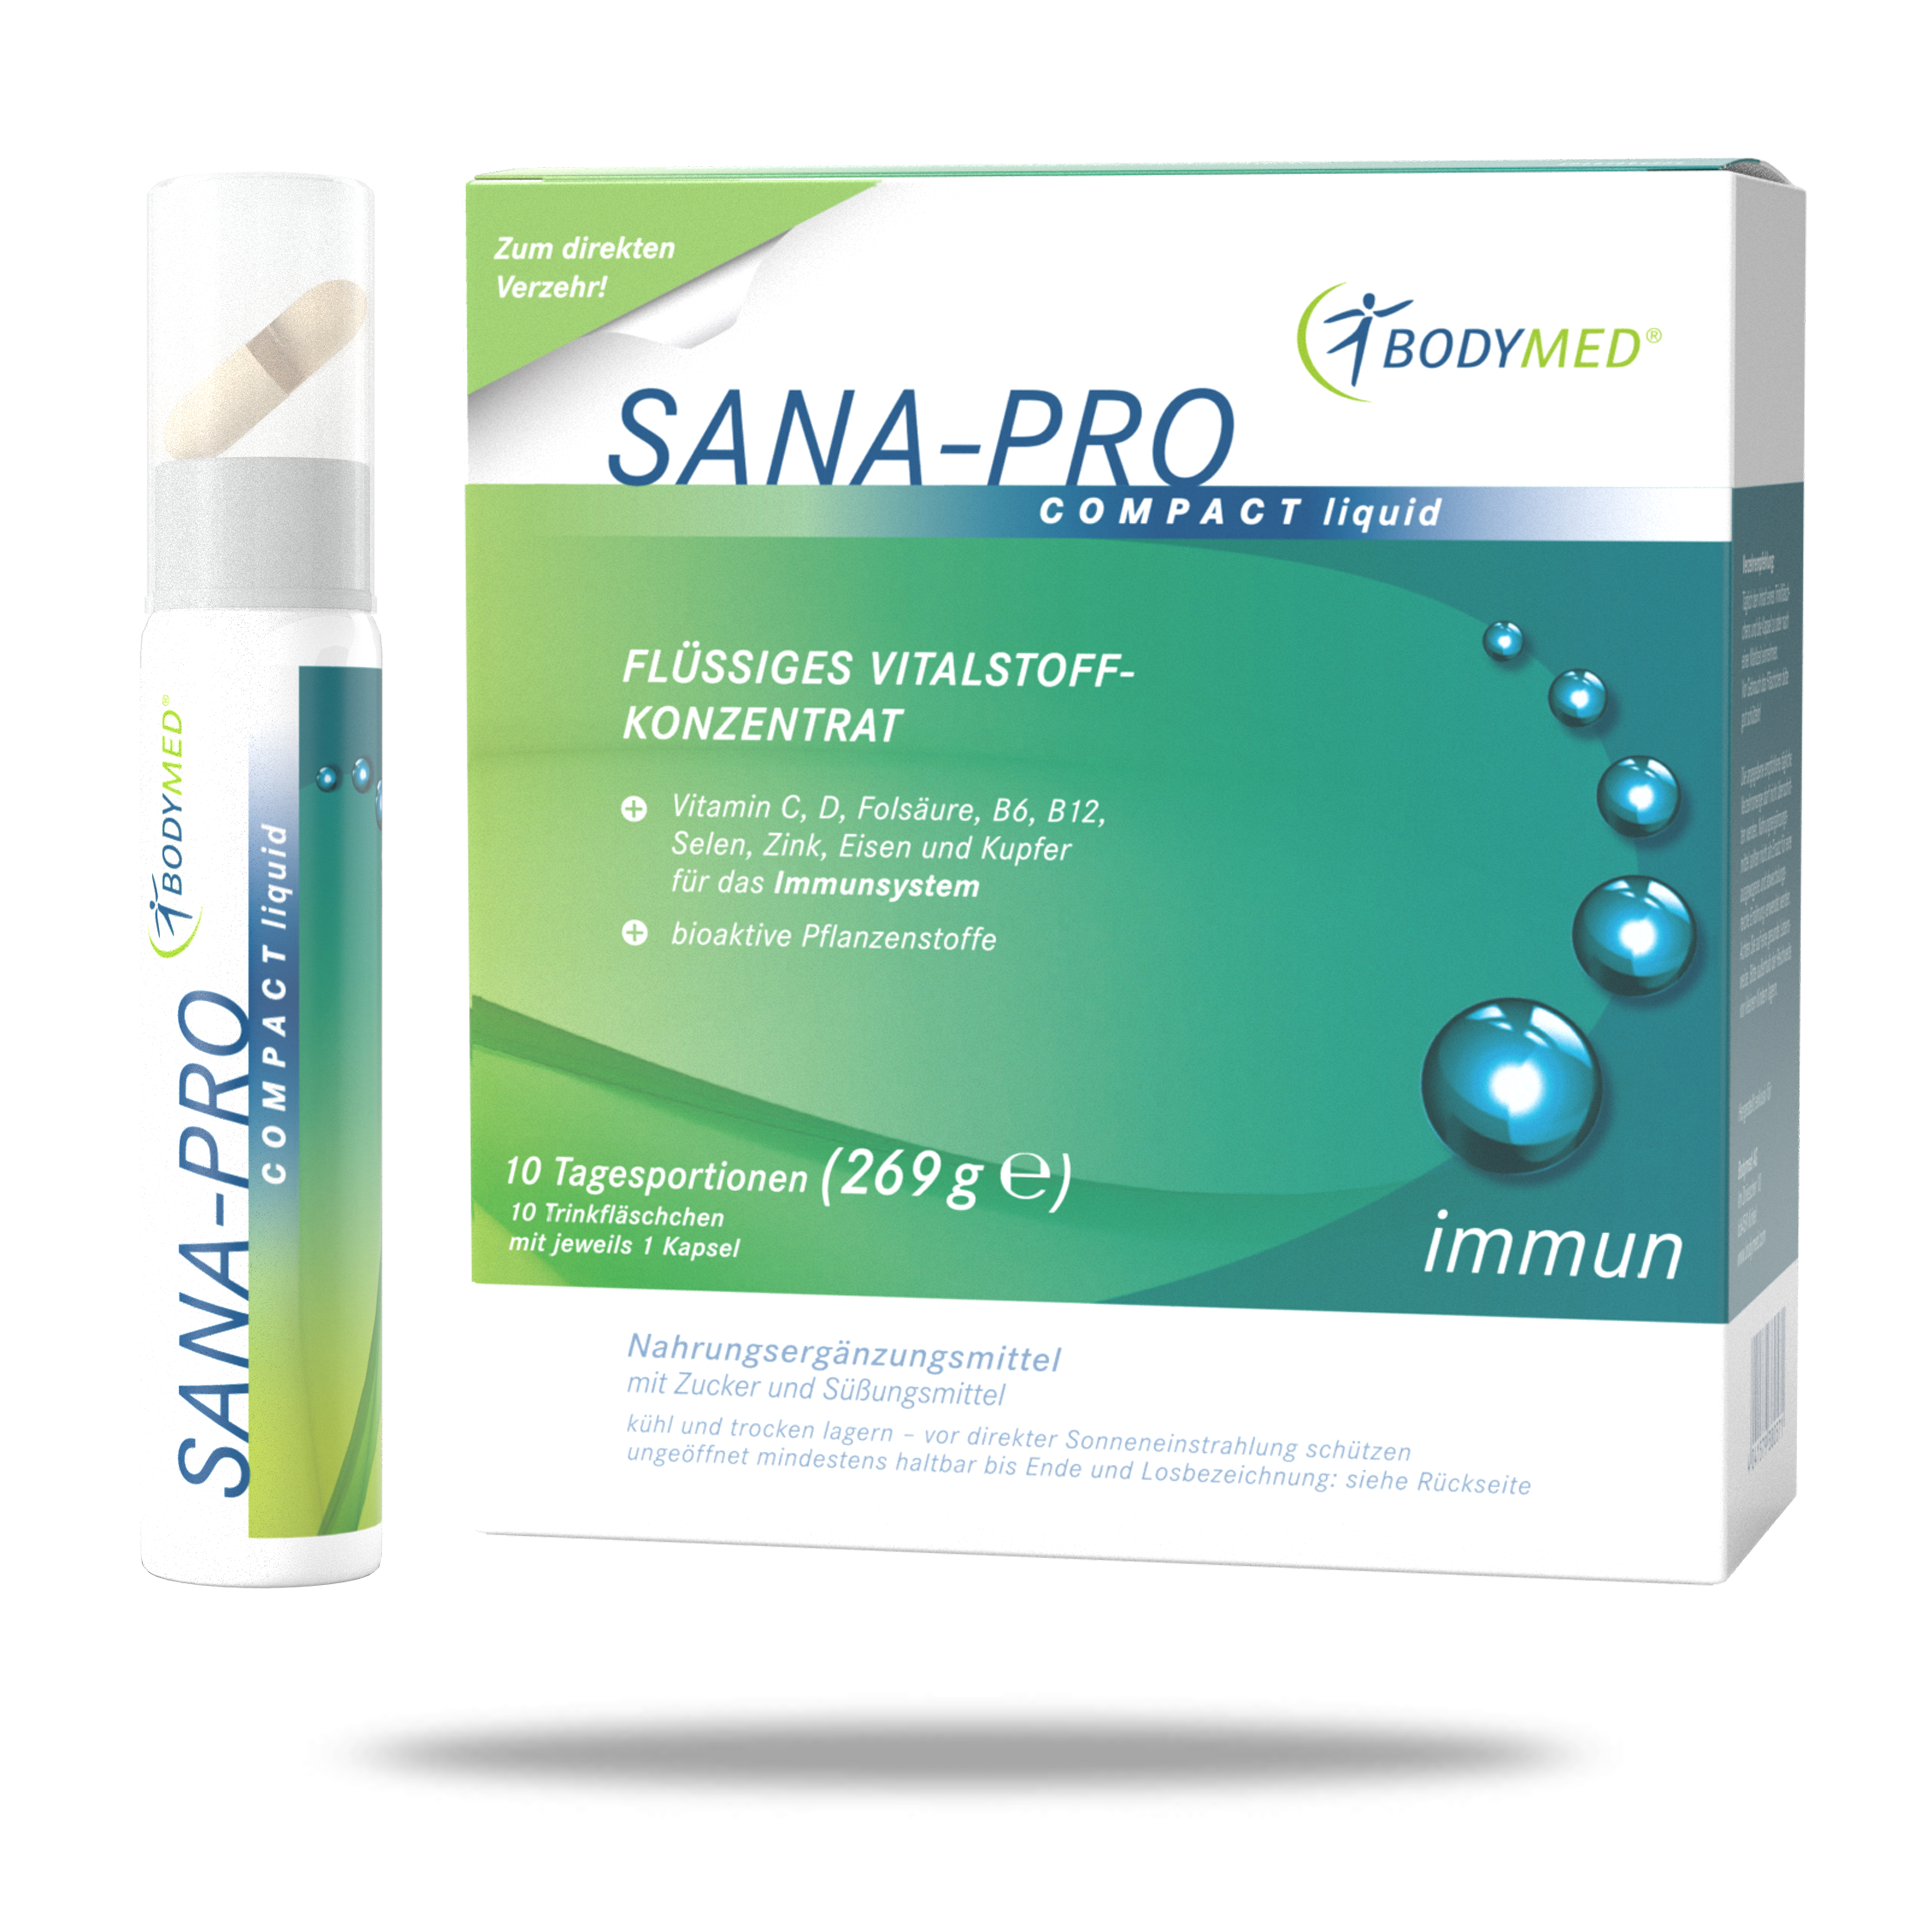 SANA-PRO COMPACT liquid immun